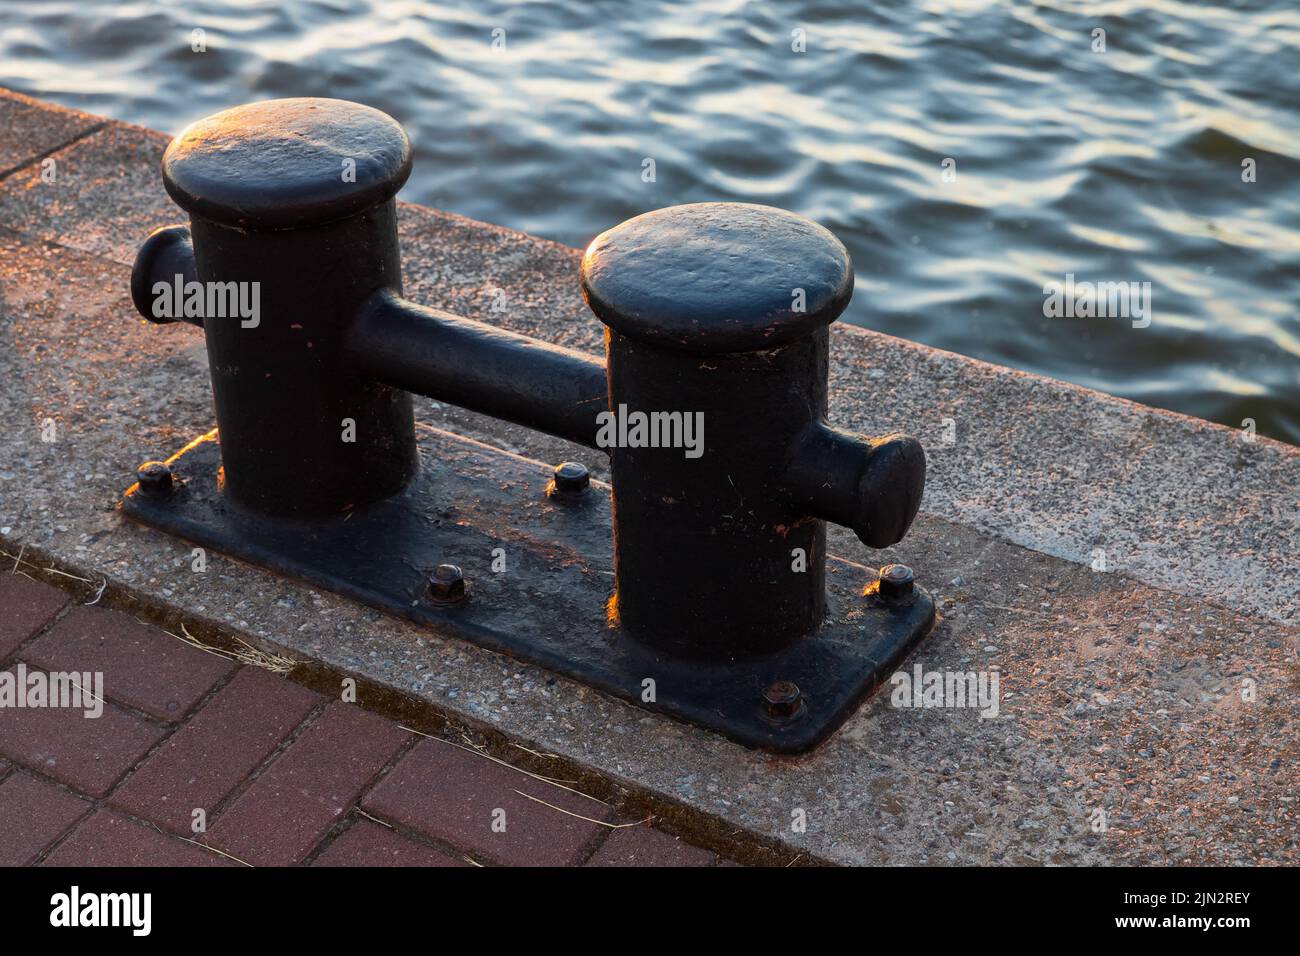 Black coastal bollard is on a concrrete pier, close up photo of port mooring equipment Stock Photo